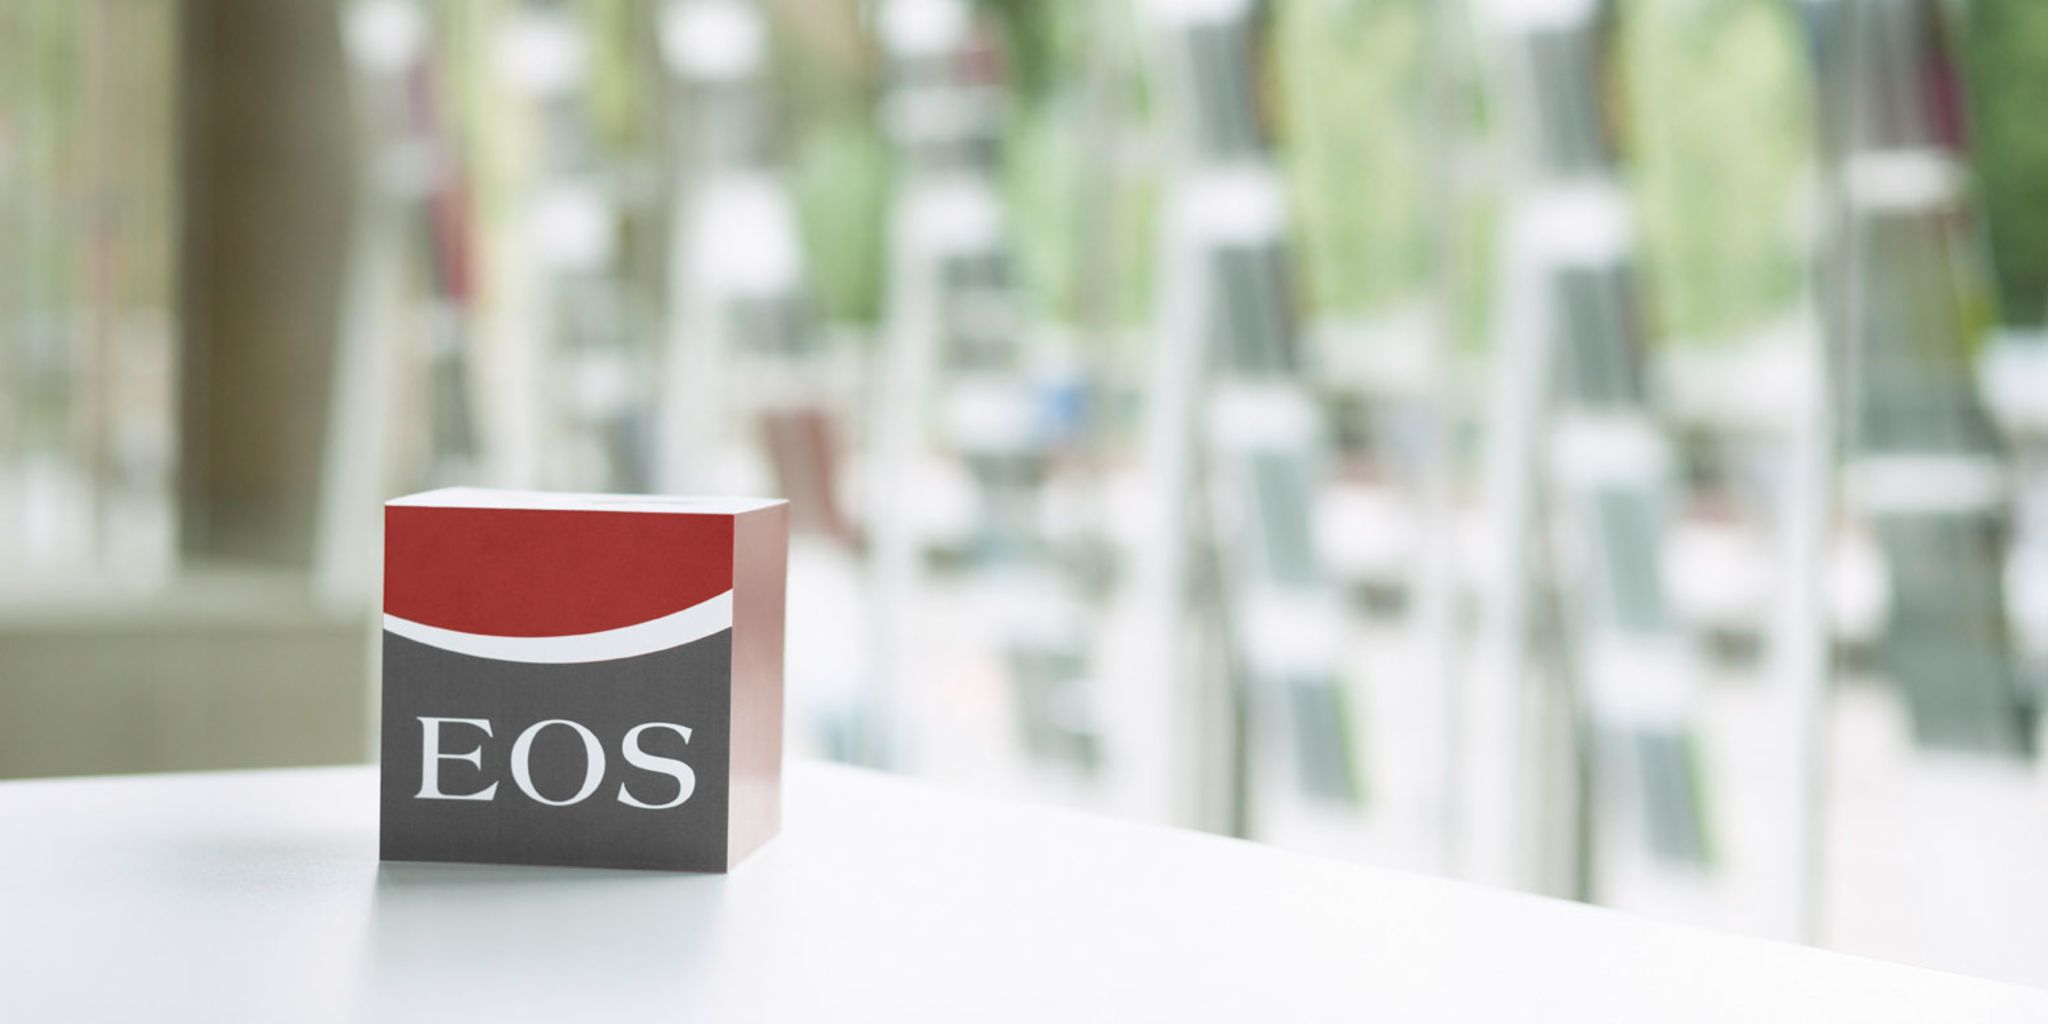 Three-dimensional EOS logo against blurred background
                     